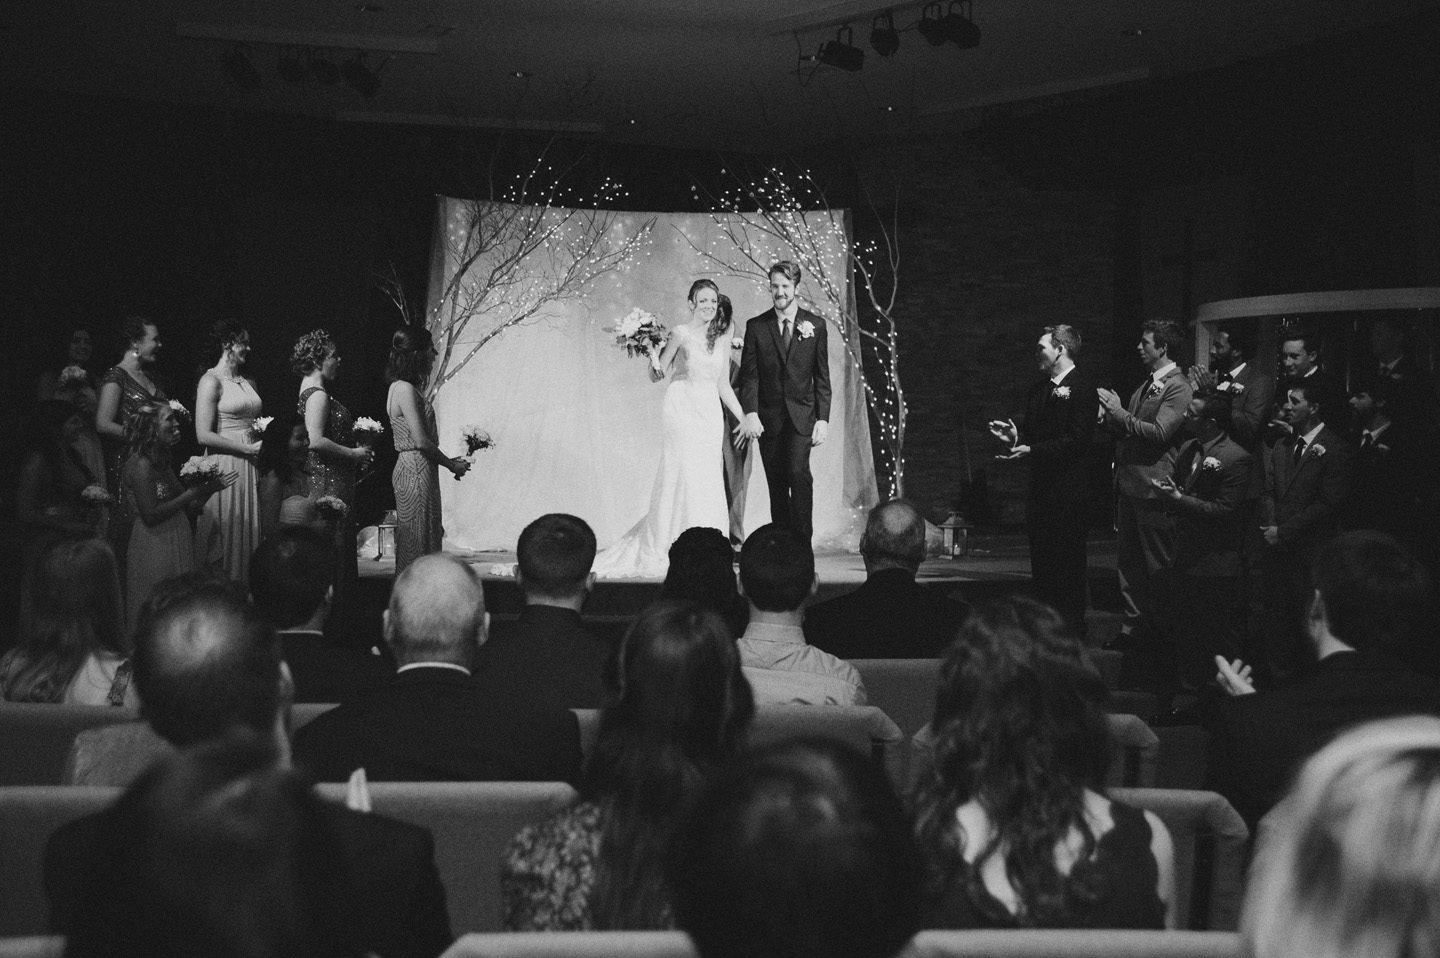 Sanctuary Vineyards Outer Banks Jockey's Ridge wedding photographer by Neil GT Photography bw ceremony